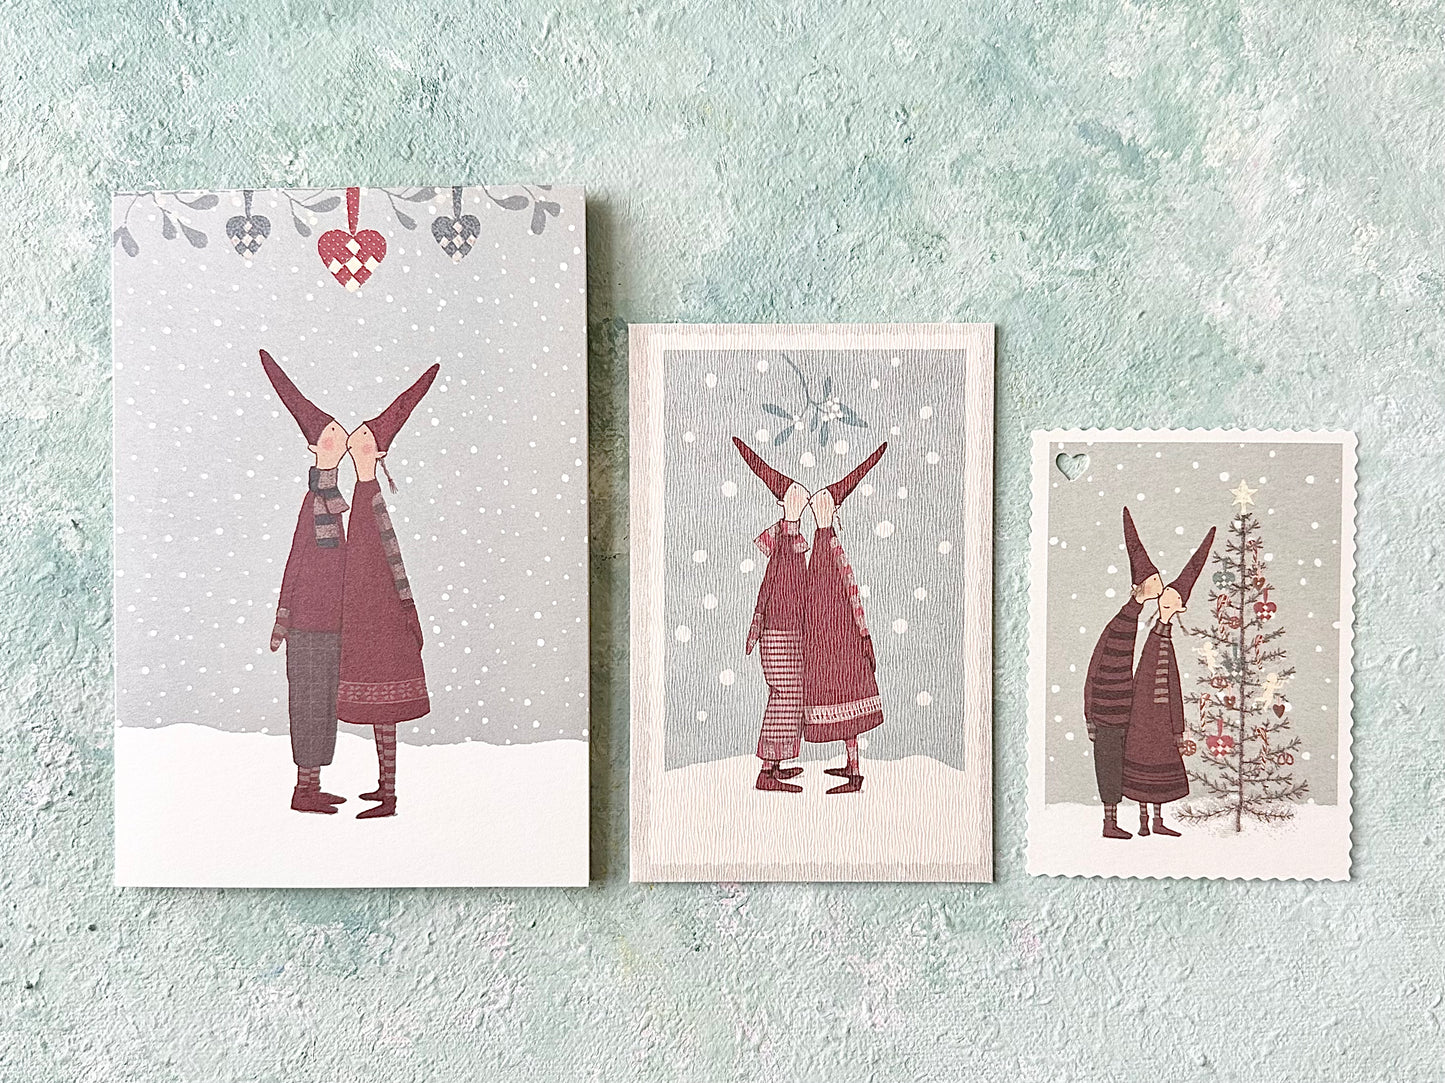 Double Christmas Card: ”Pixy Tree” - 2012